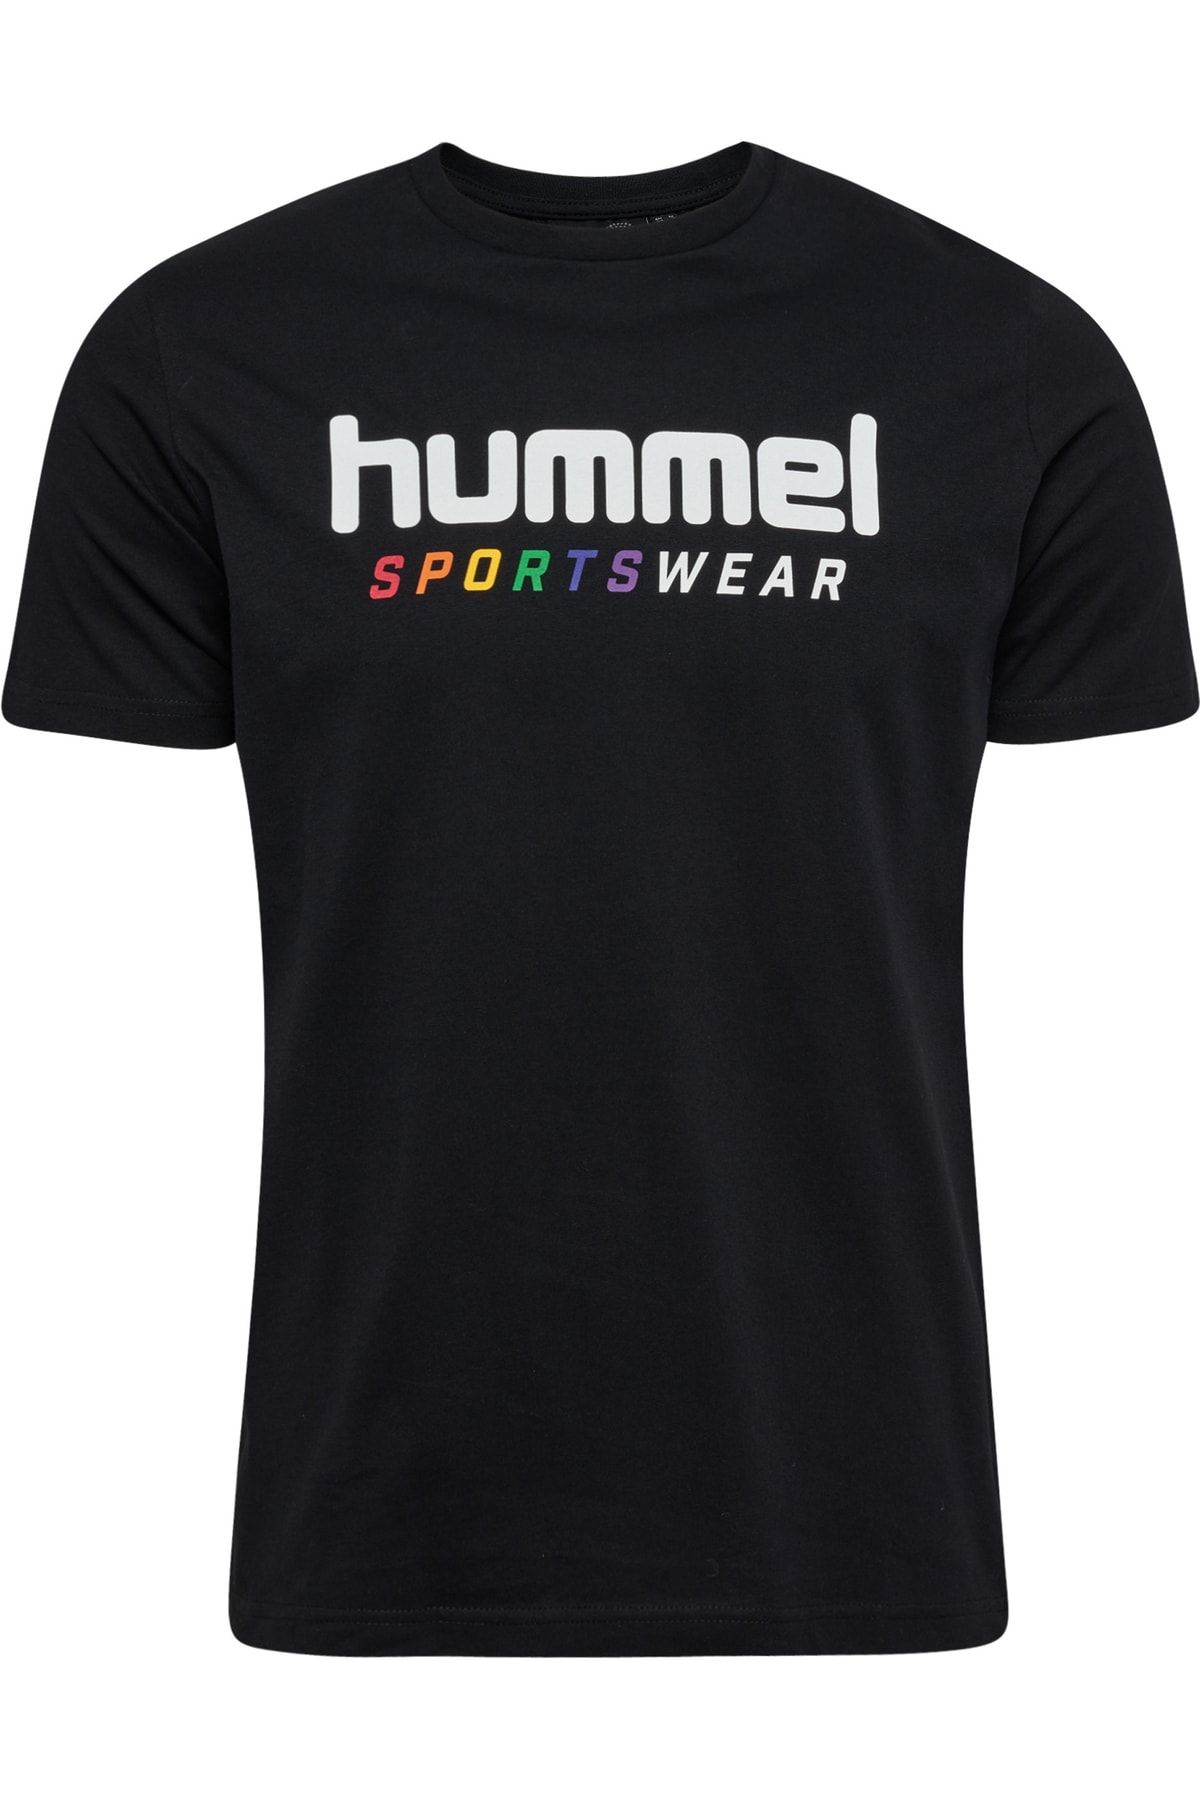 HUMMEL T-Shirt Schwarz - Fit Regular - Trendyol 